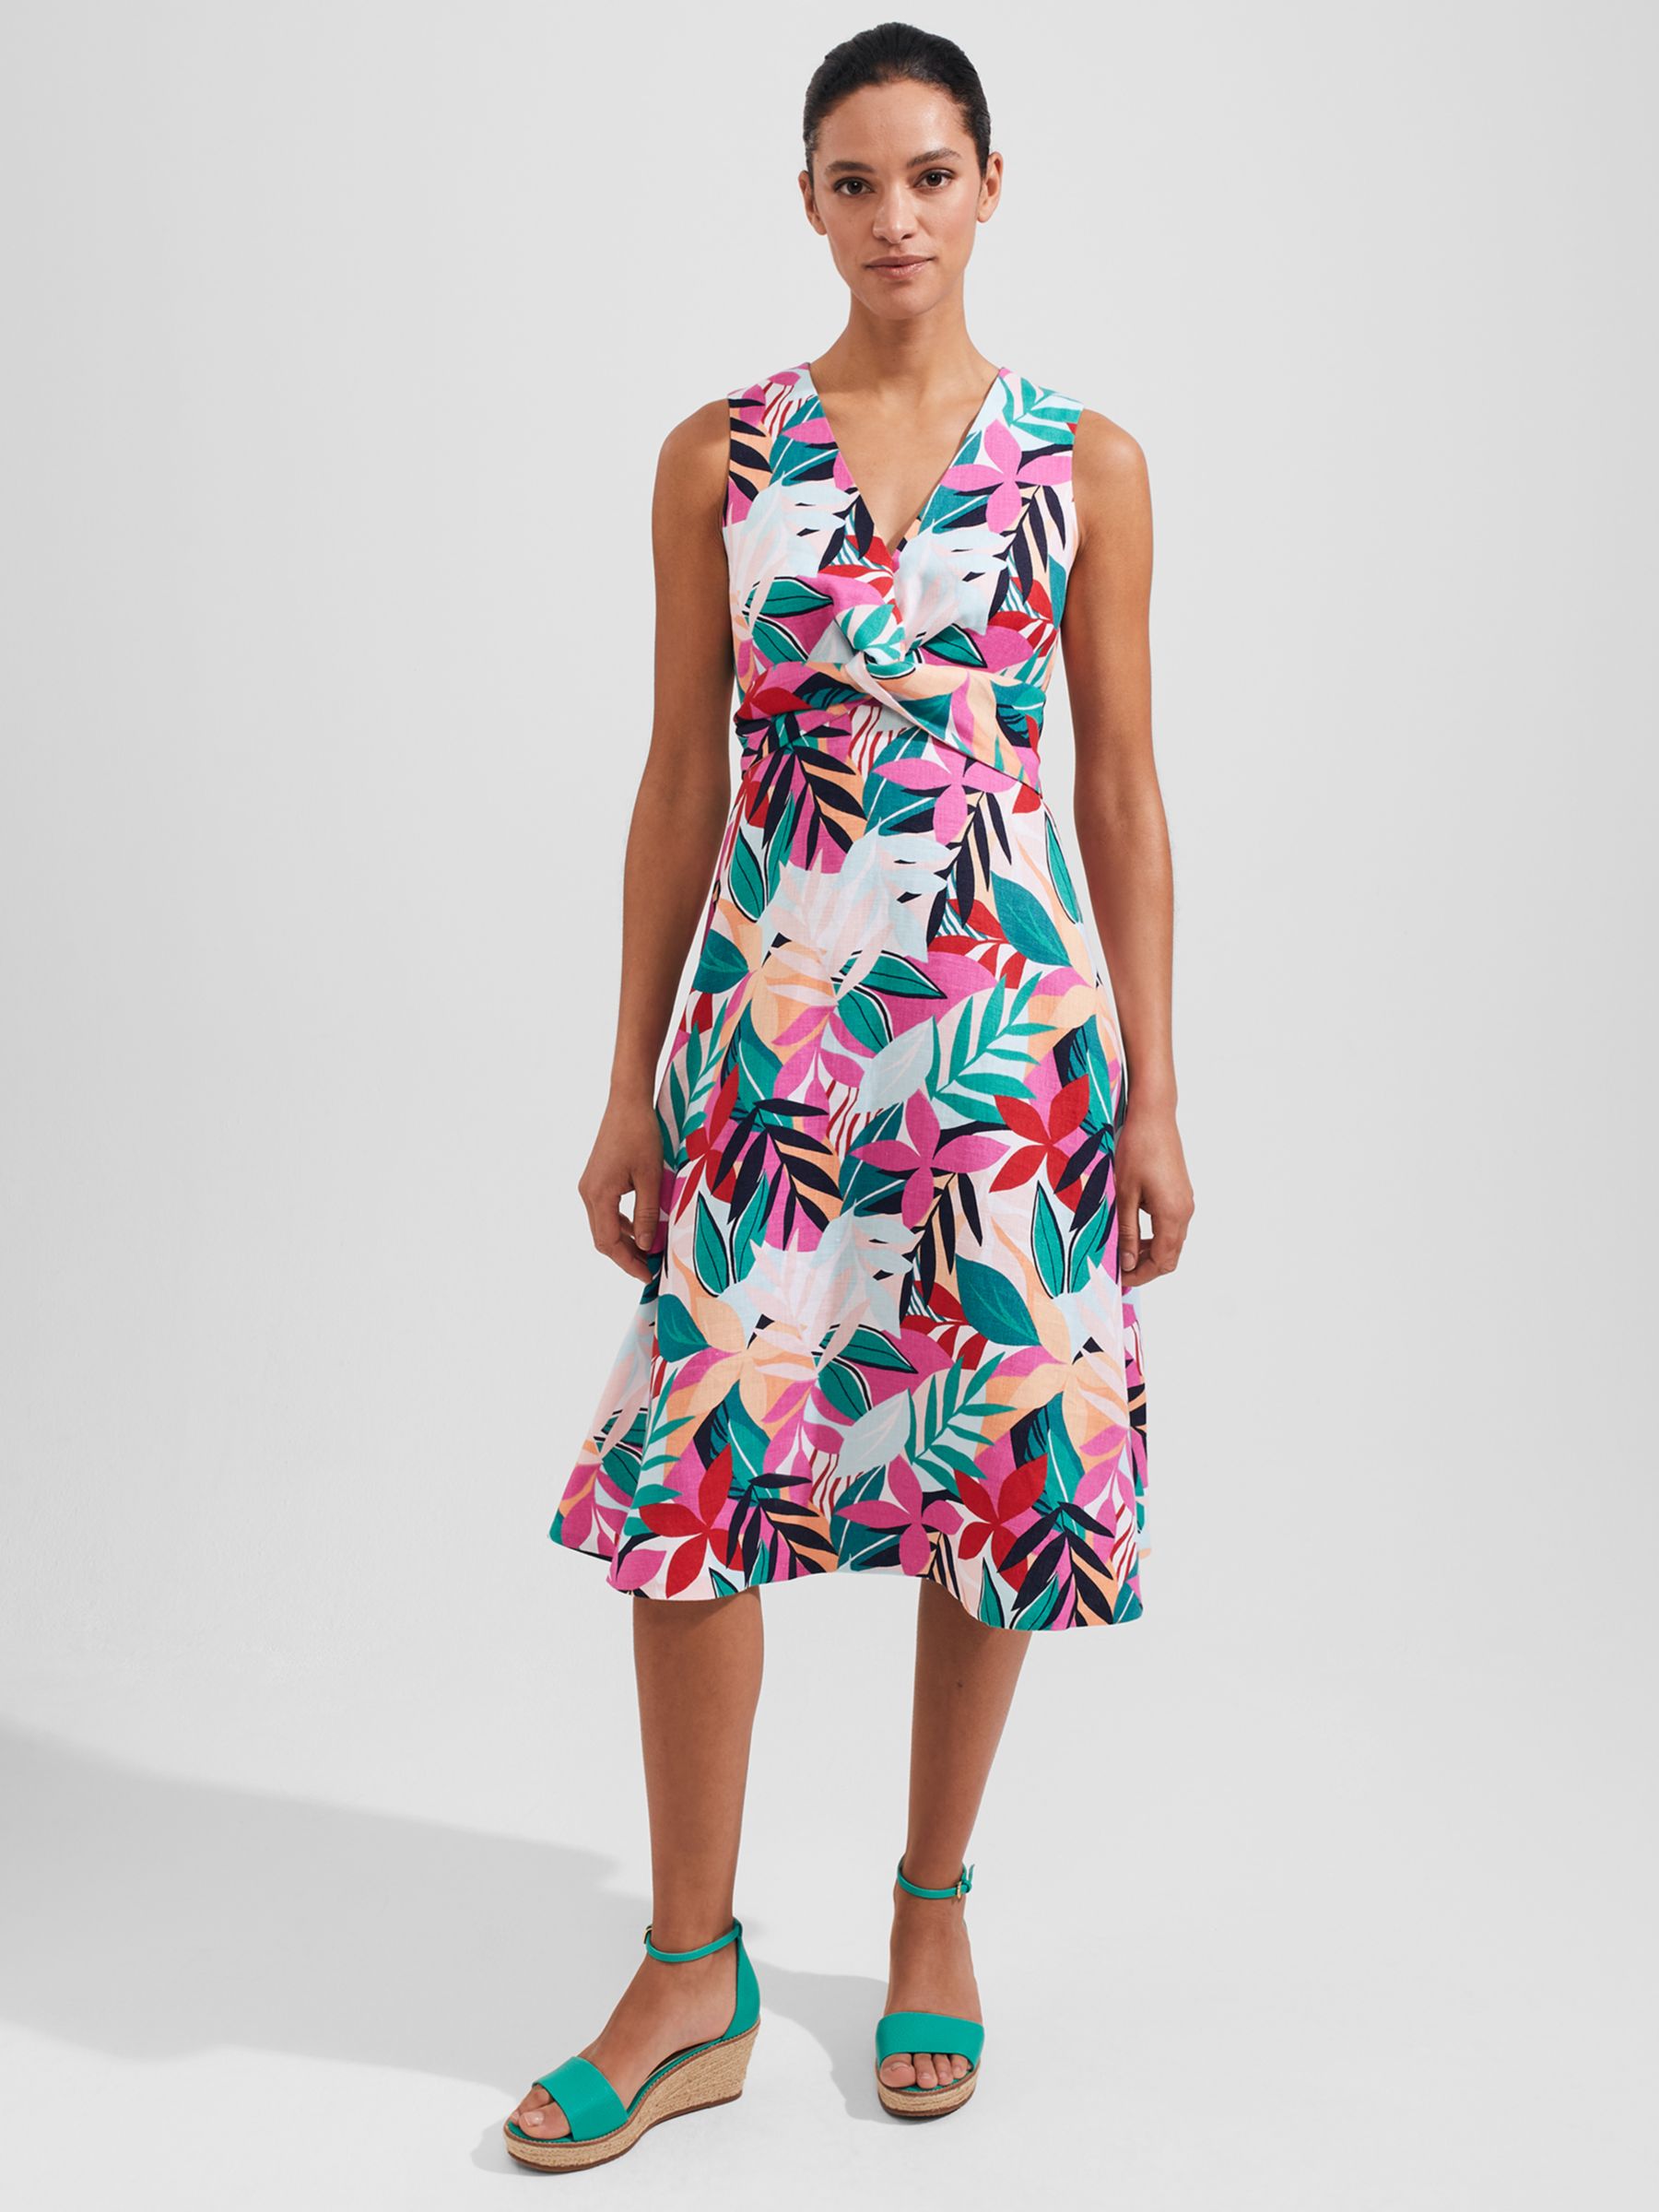 Hobbs Petite Mariella Leaf Print Linen Dress, Multi, 6